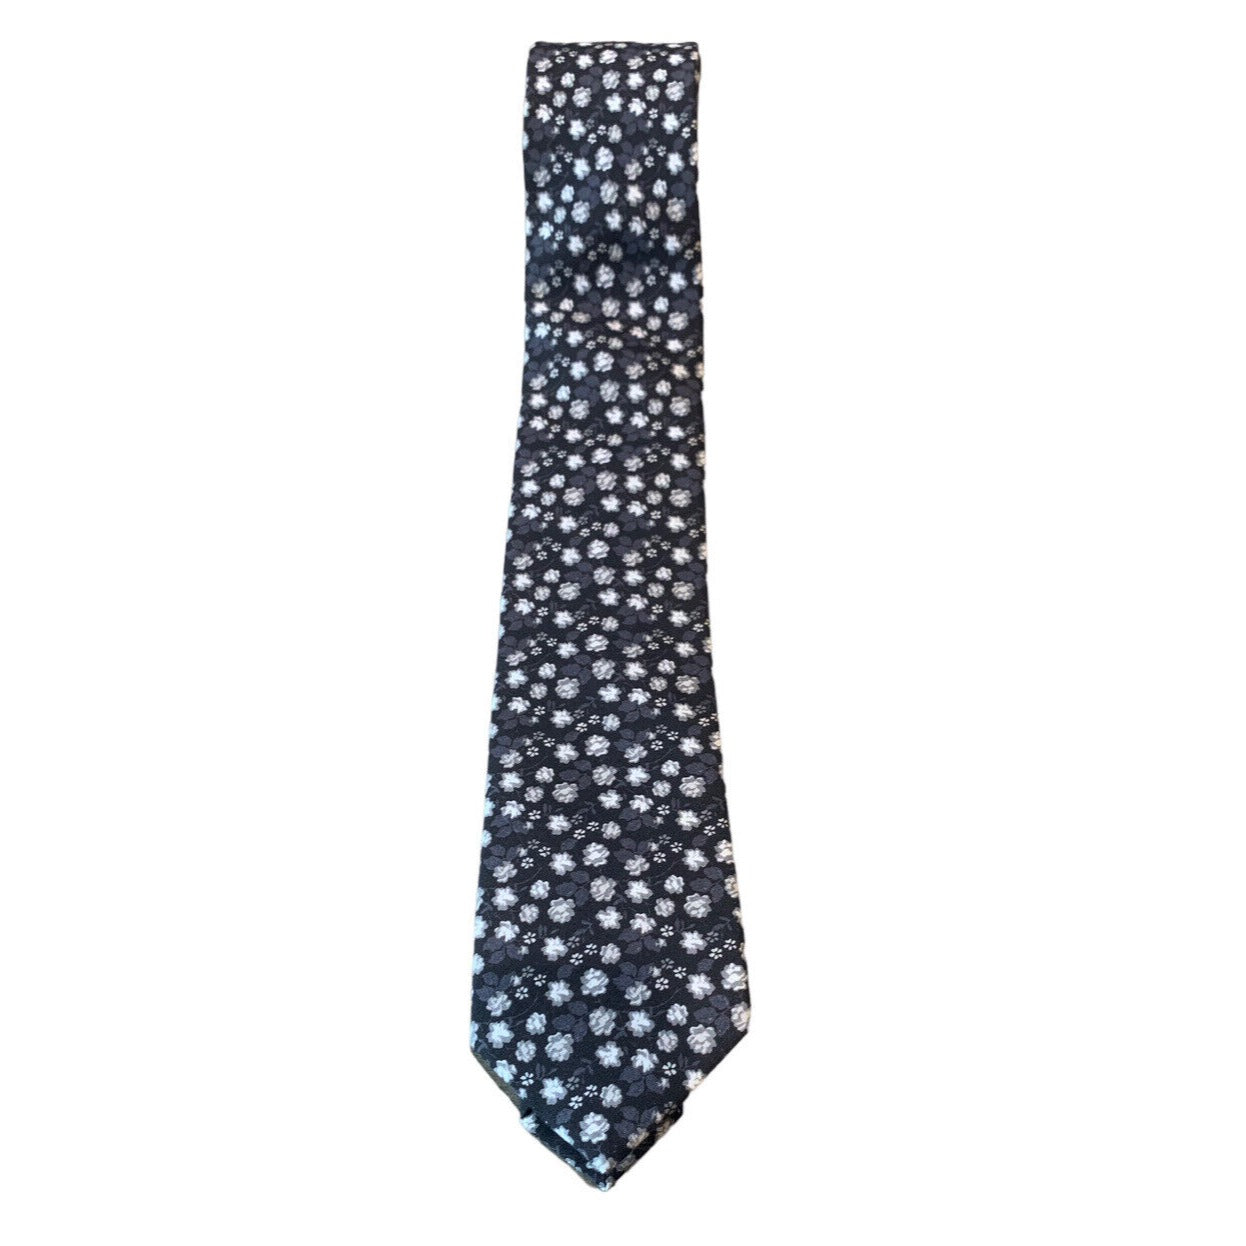 Men's Skinny Tie With Floral Print